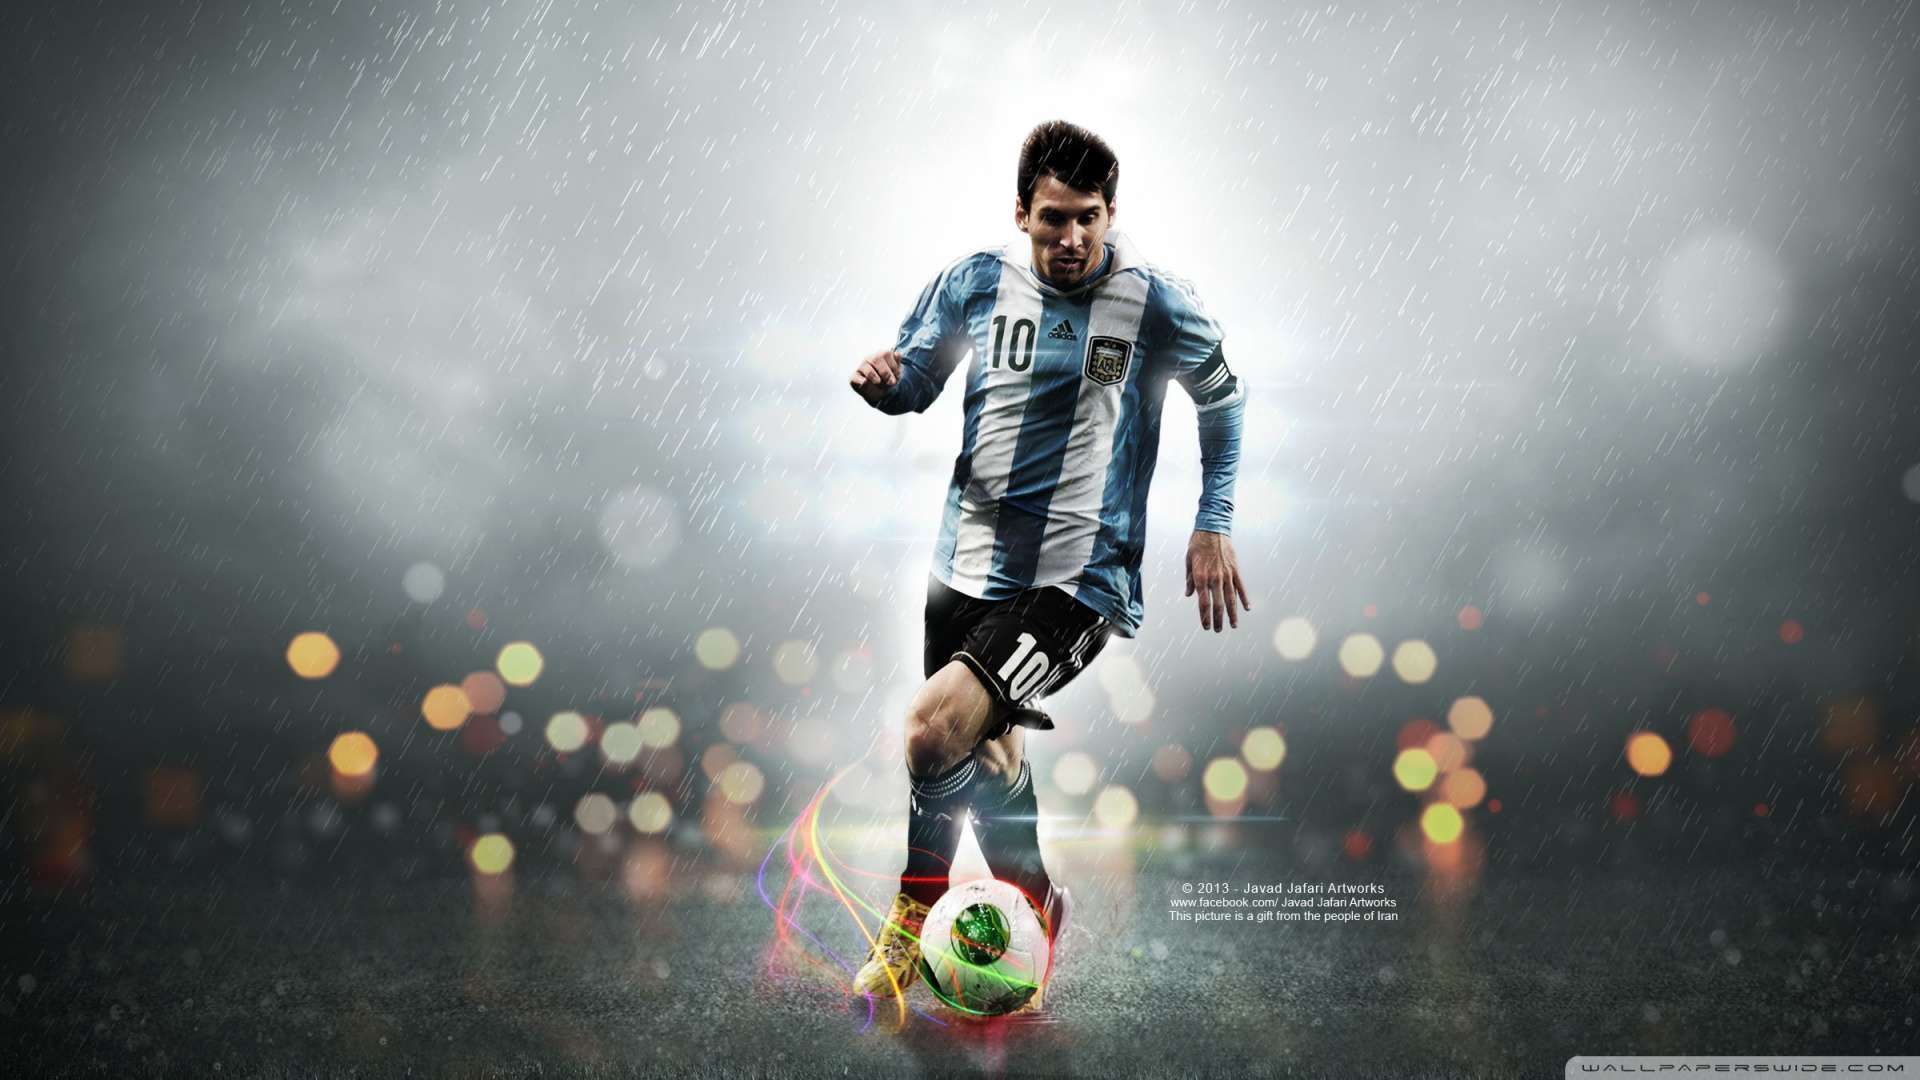 Wallpaper Leo Messi 10 Wallpaper 1080p HD Upload at February 5 2014